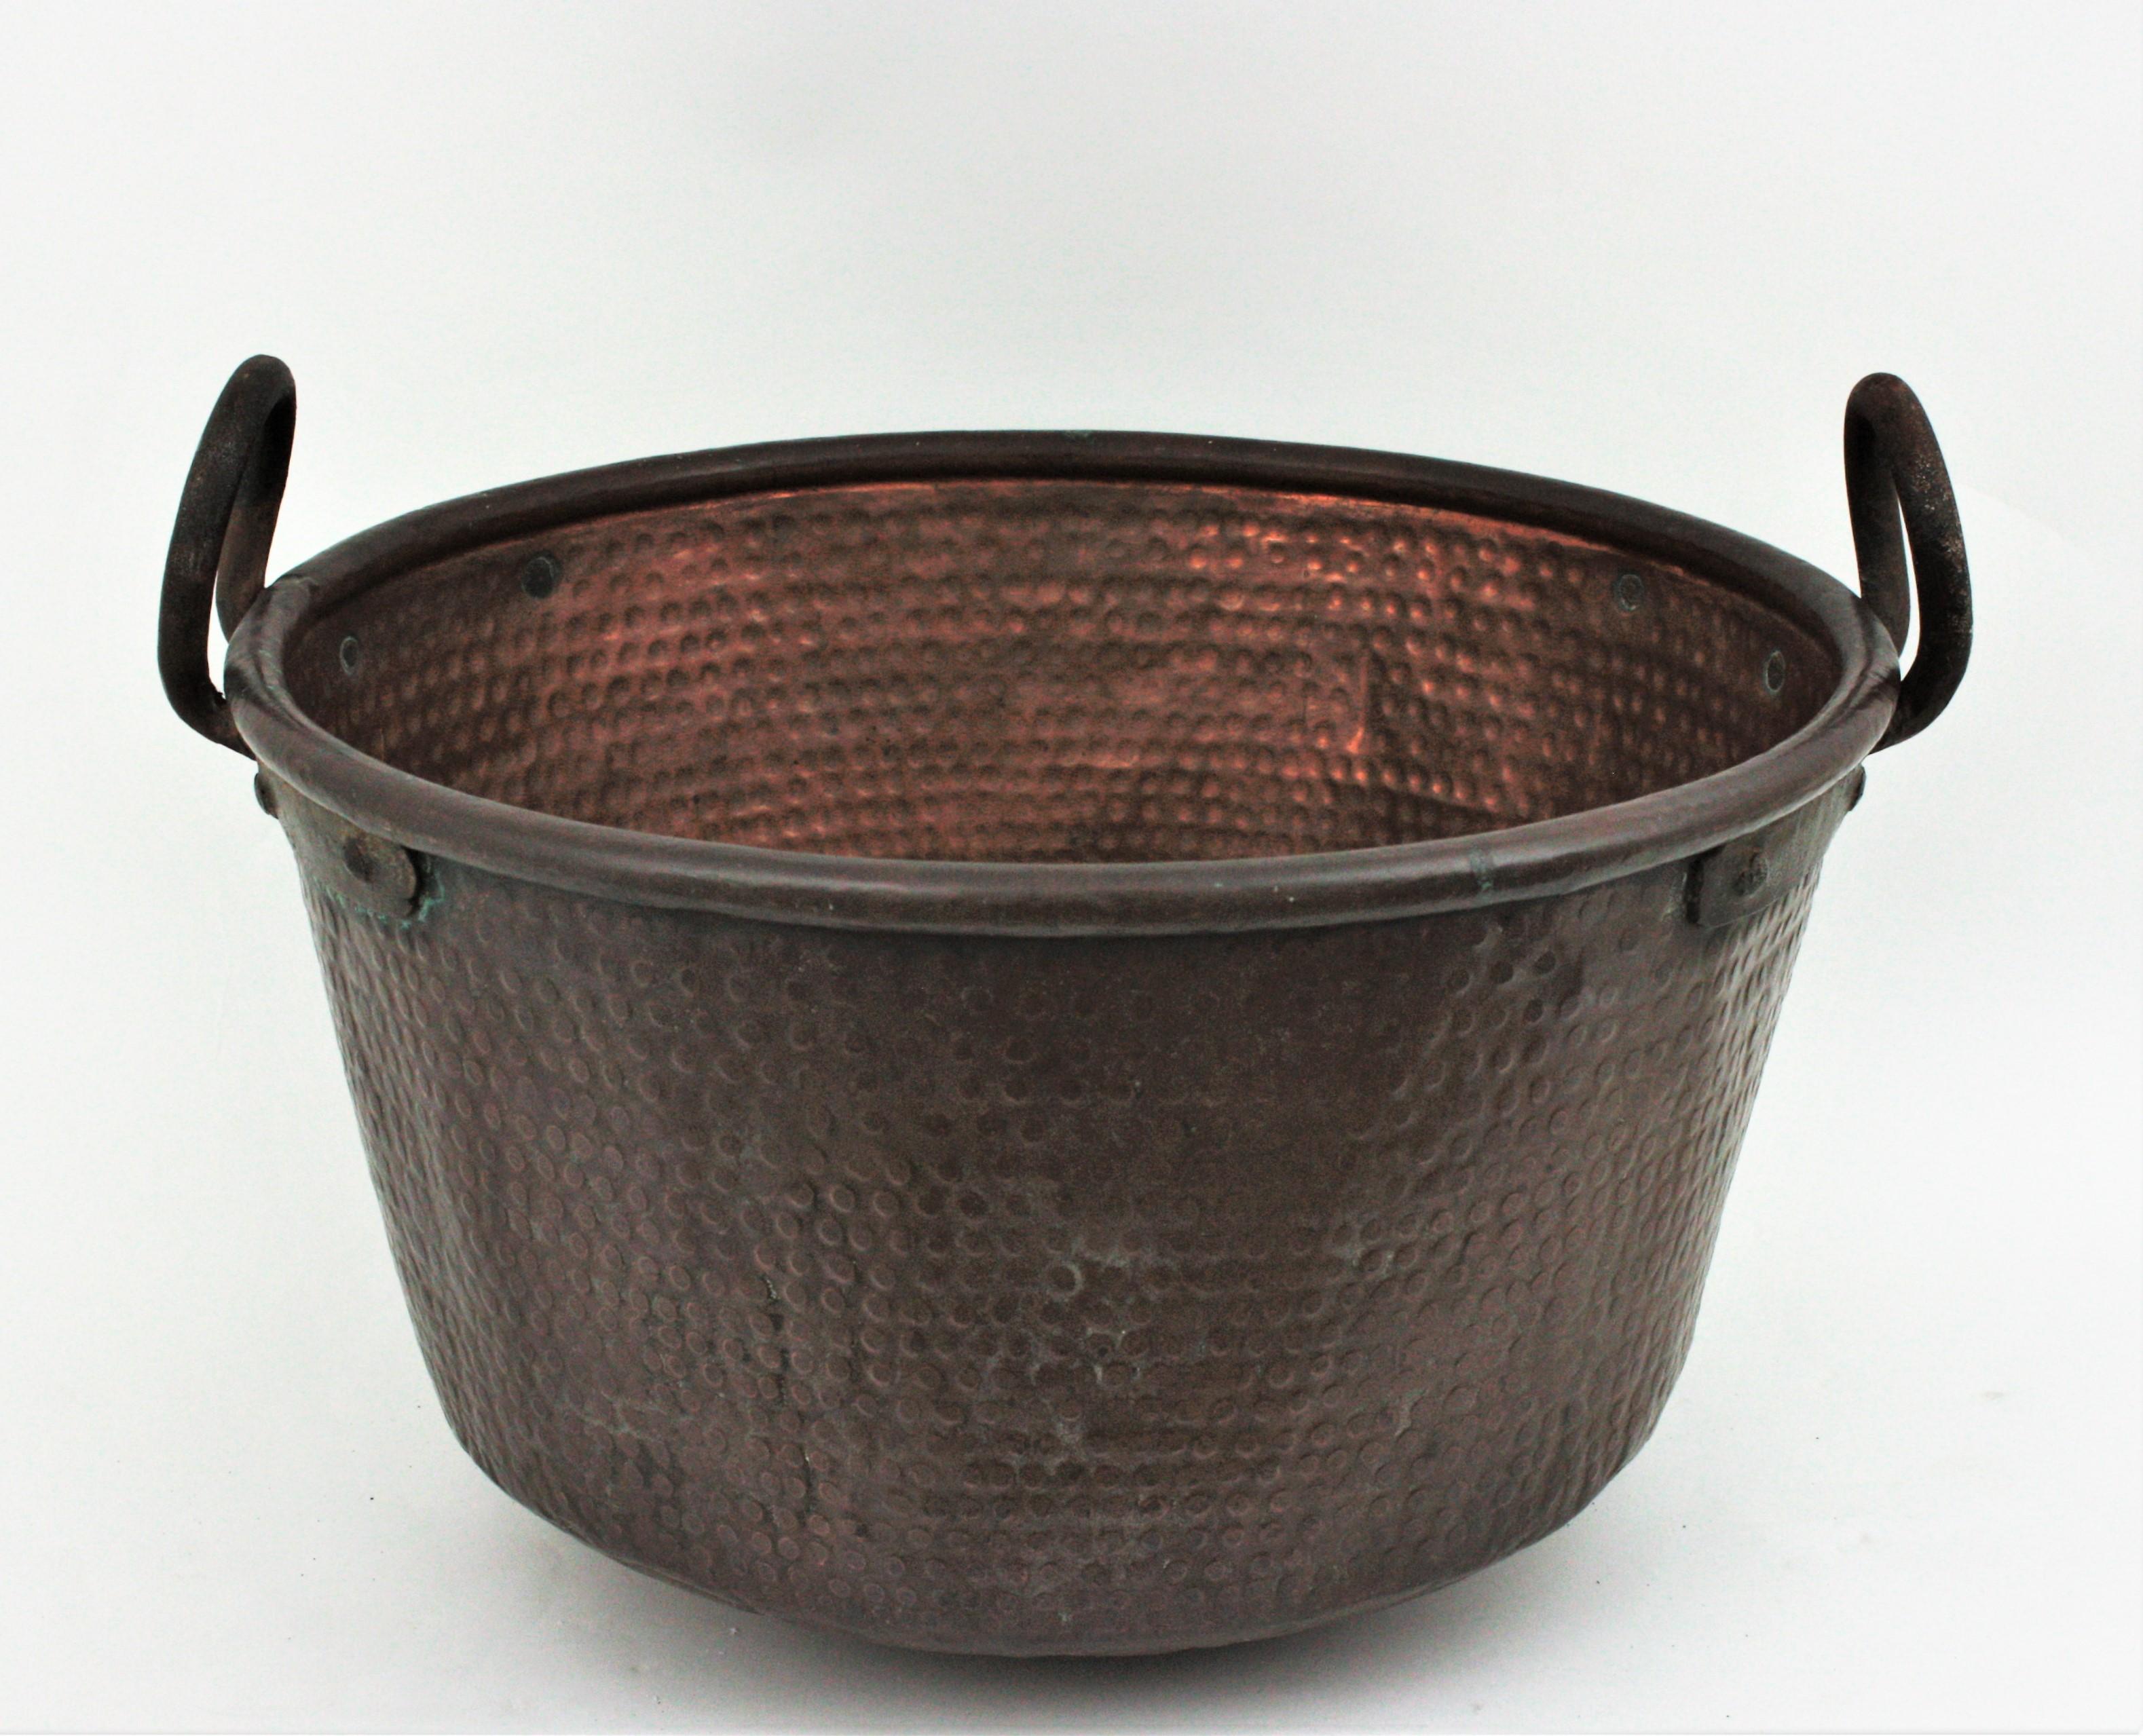 cauldron in spanish